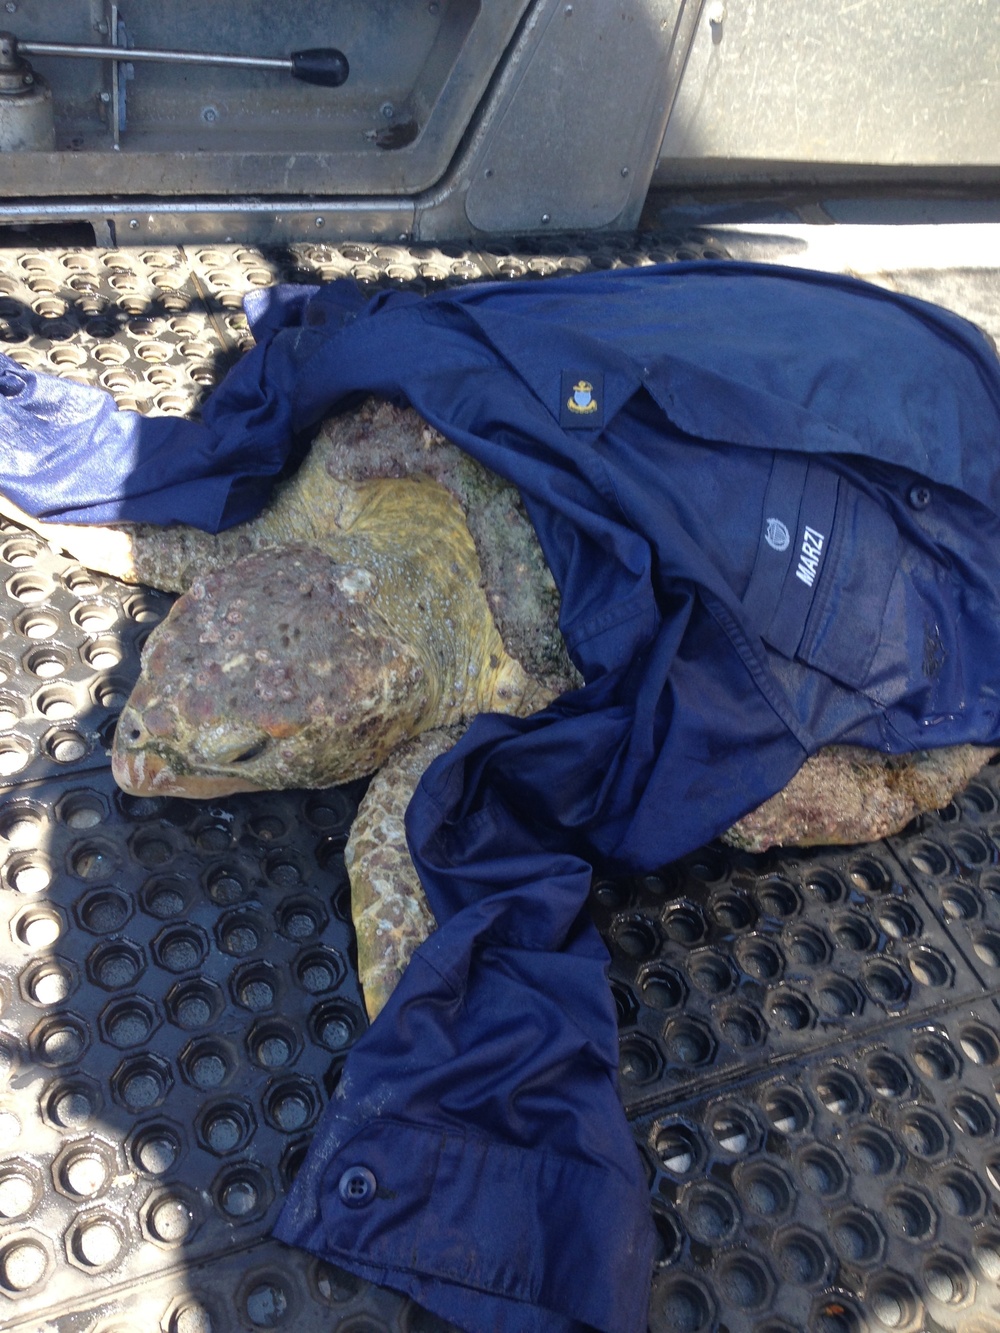 Coast Guard rescues injured sea turtle in Tampa Bay, Fla.